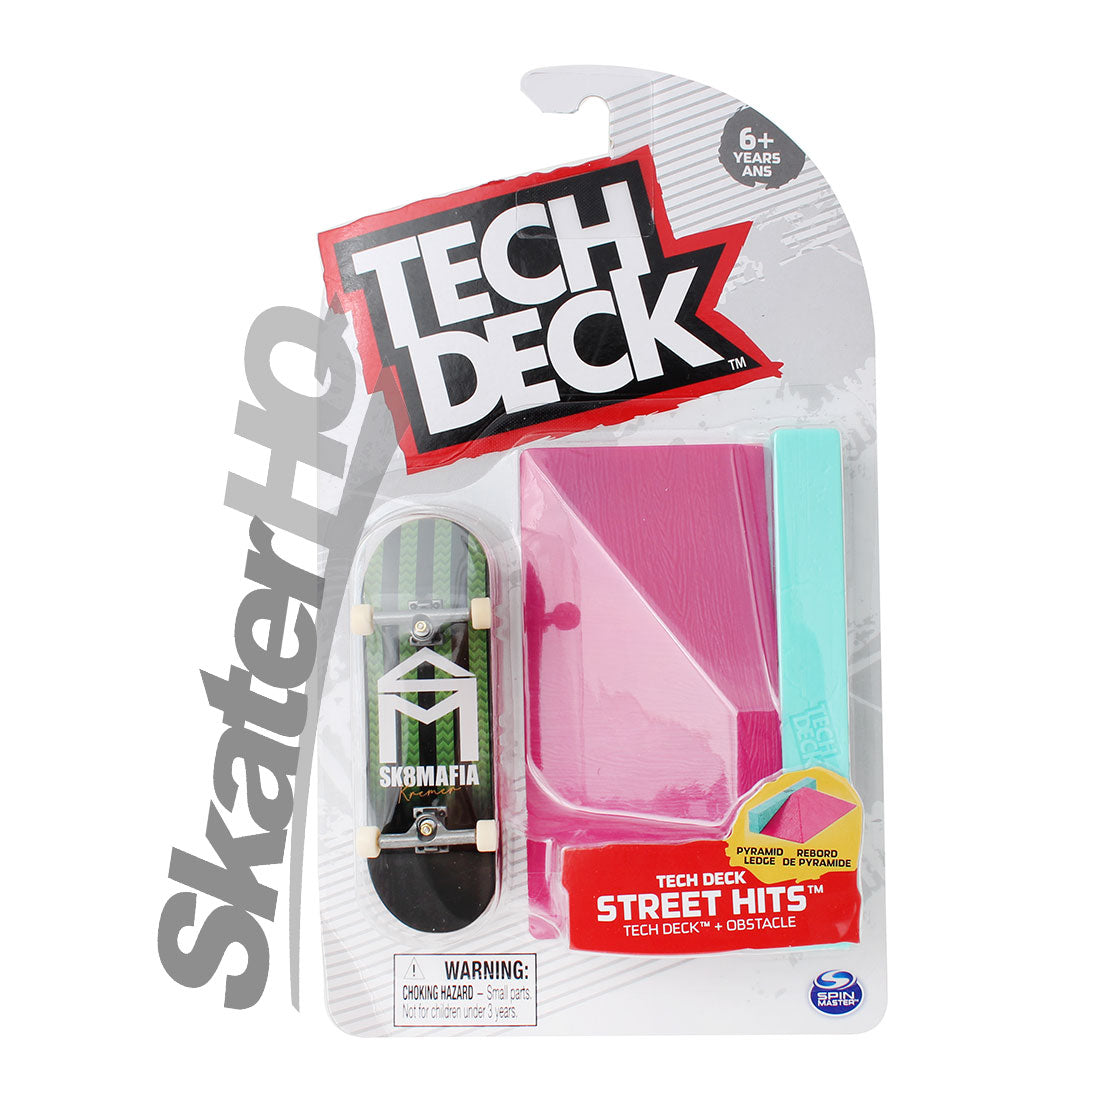 Tech Deck Street Hits - SK8 Mafia Pyramid Ledge Skateboard Accessories